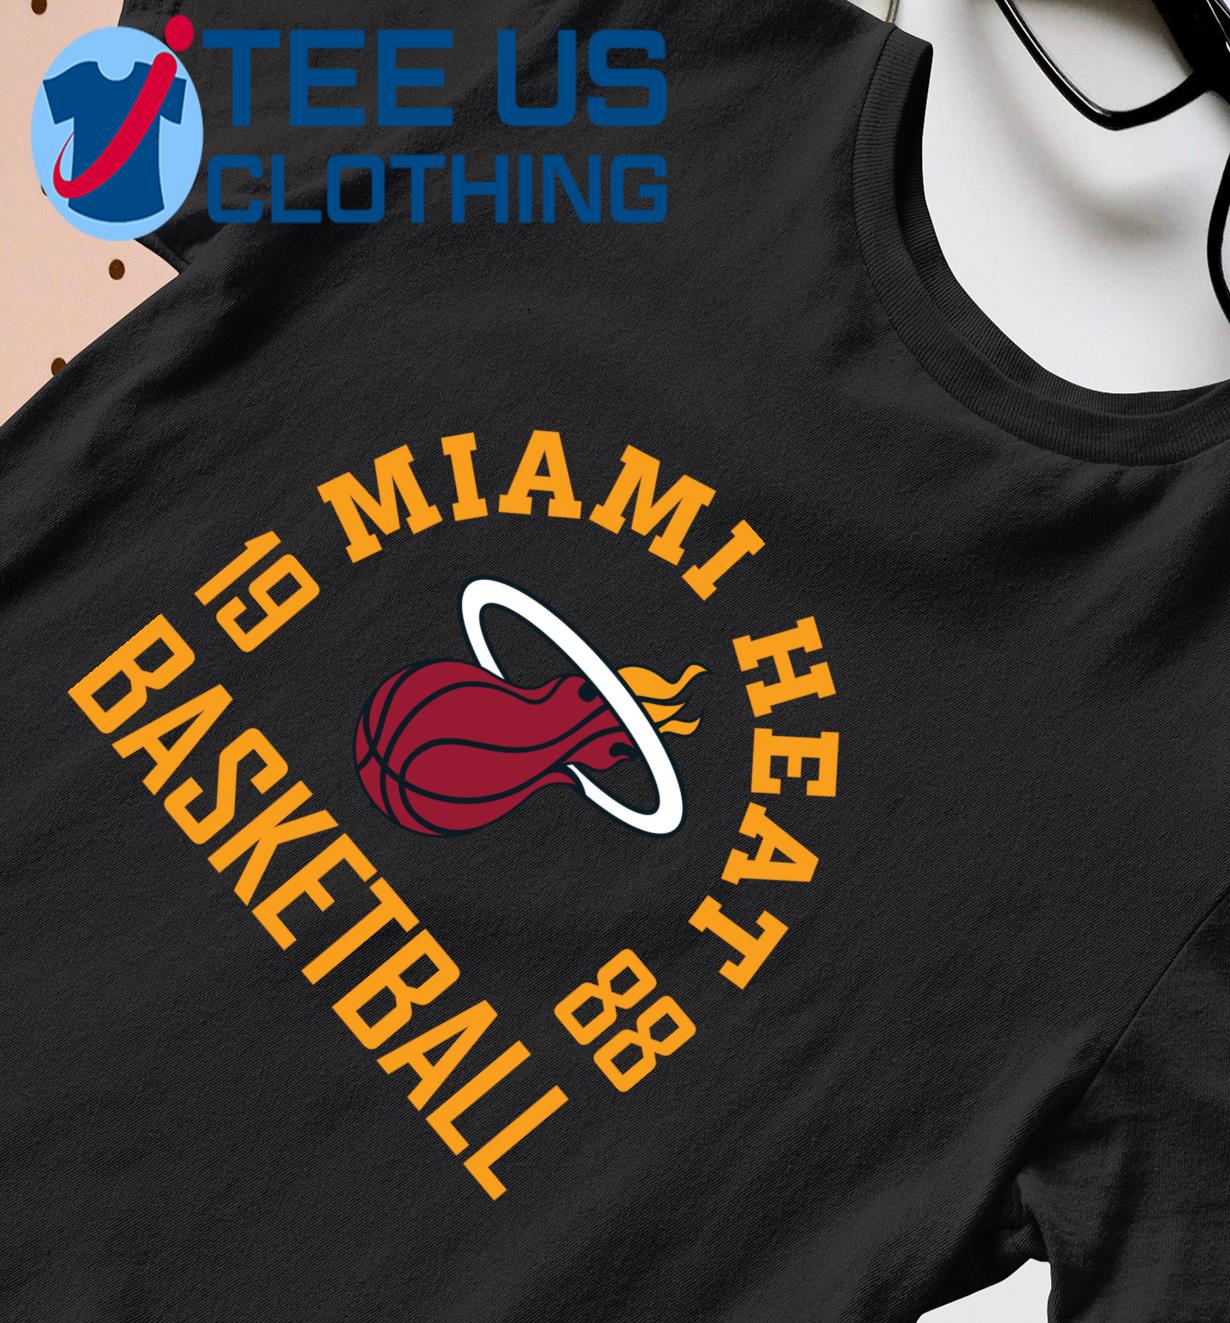 Miami Heat Basketball 1988 shirt